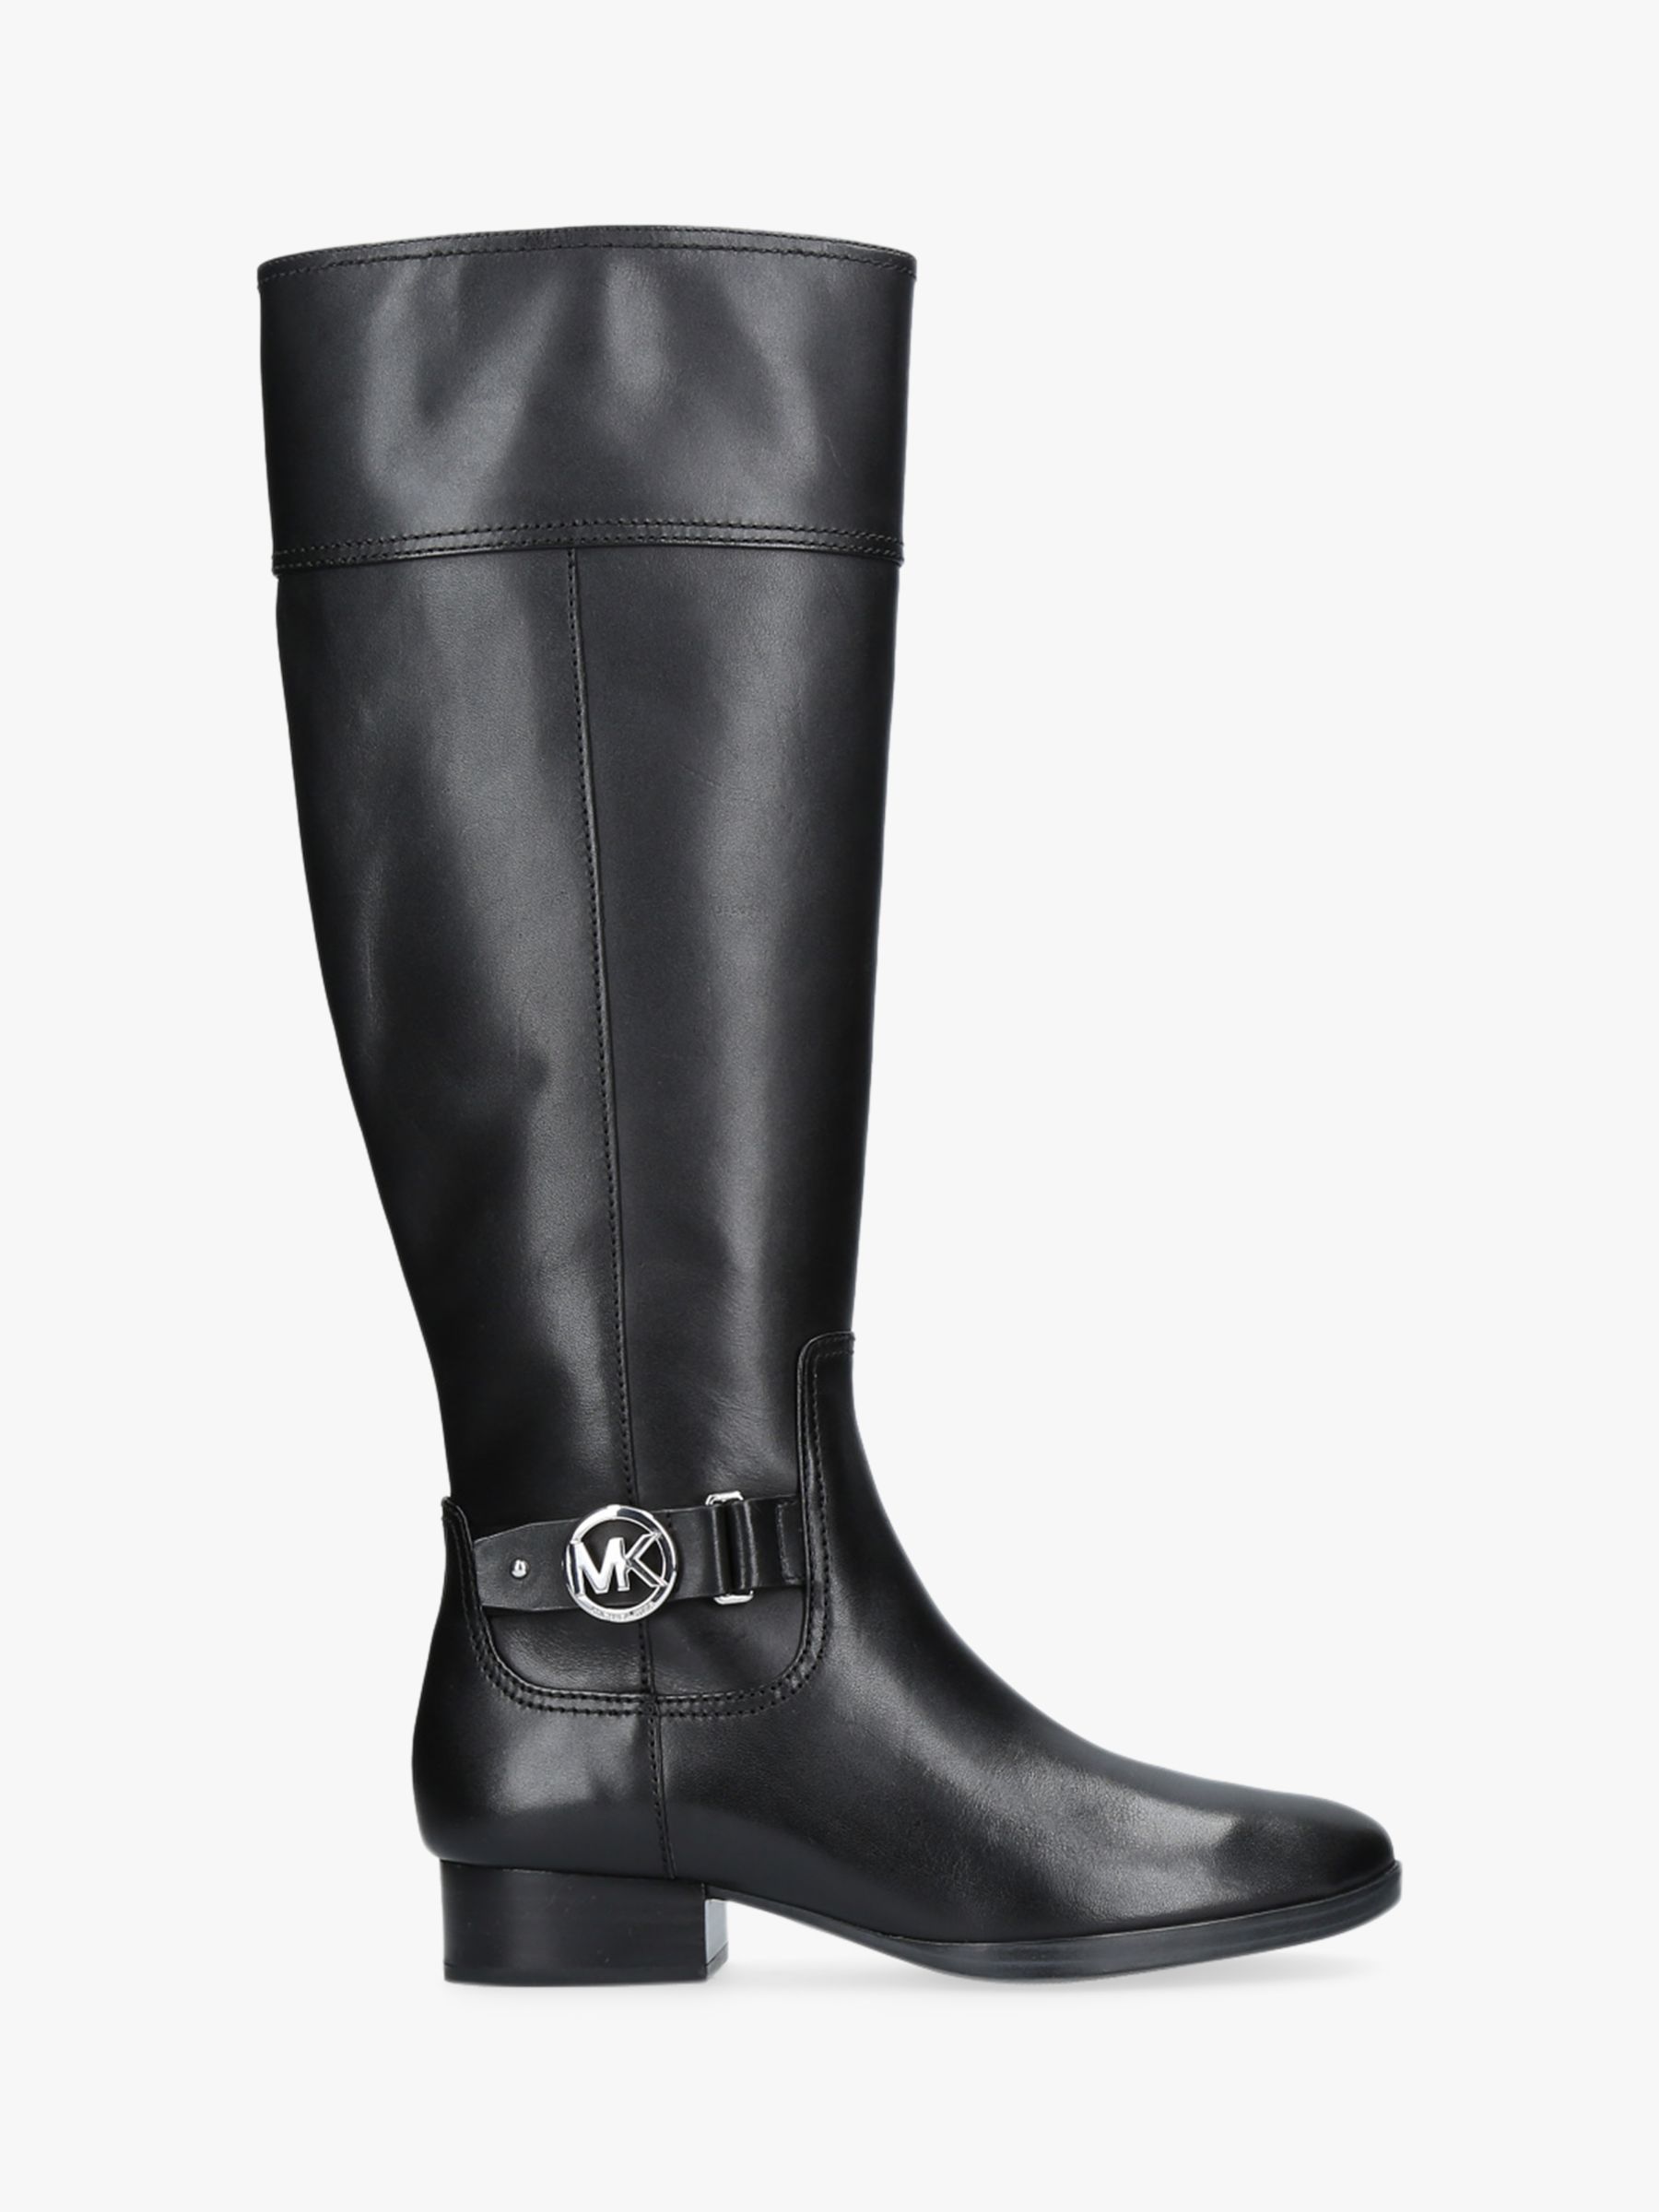 MICHAEL Michael Kors Harland Knee High Boots, Black Leather